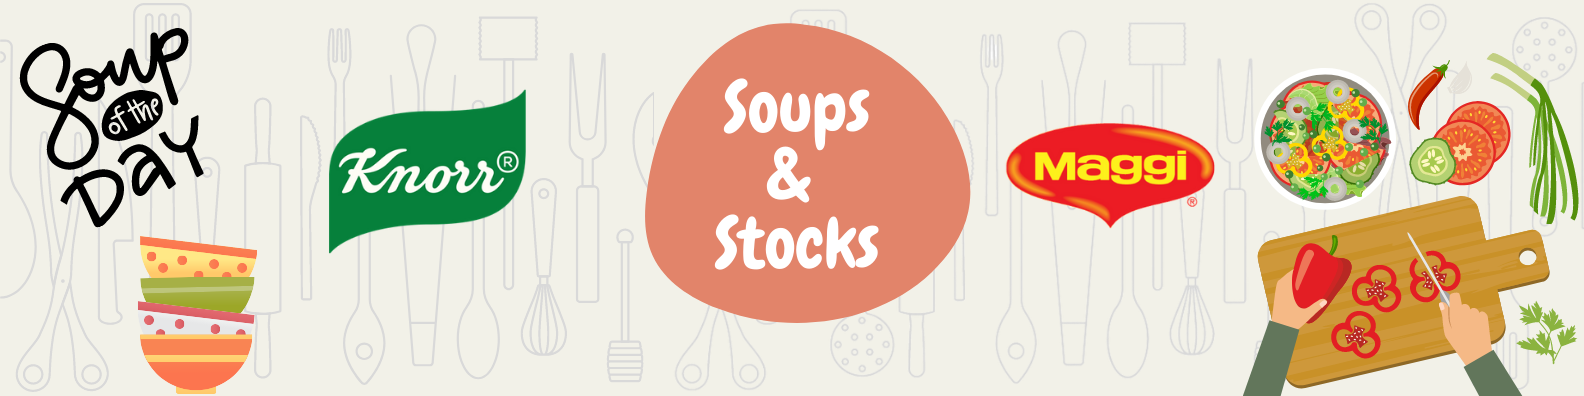 Soups & Stock